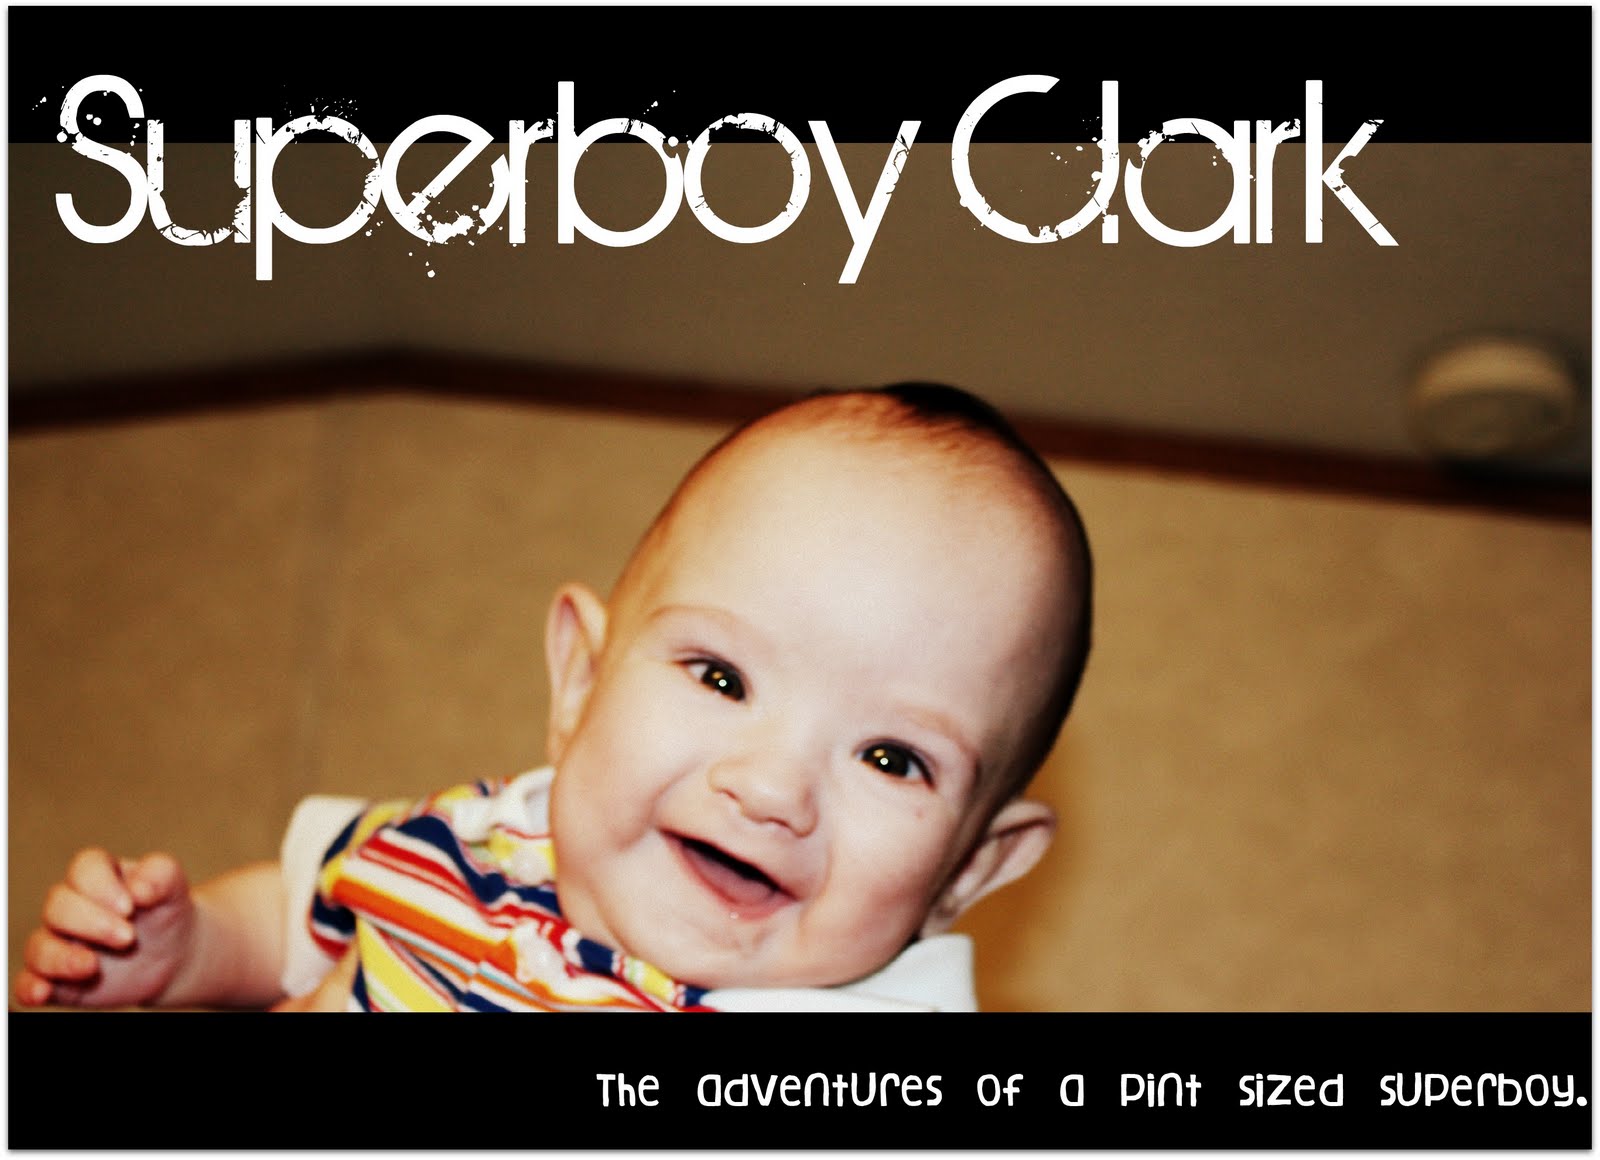 Superboy Clark